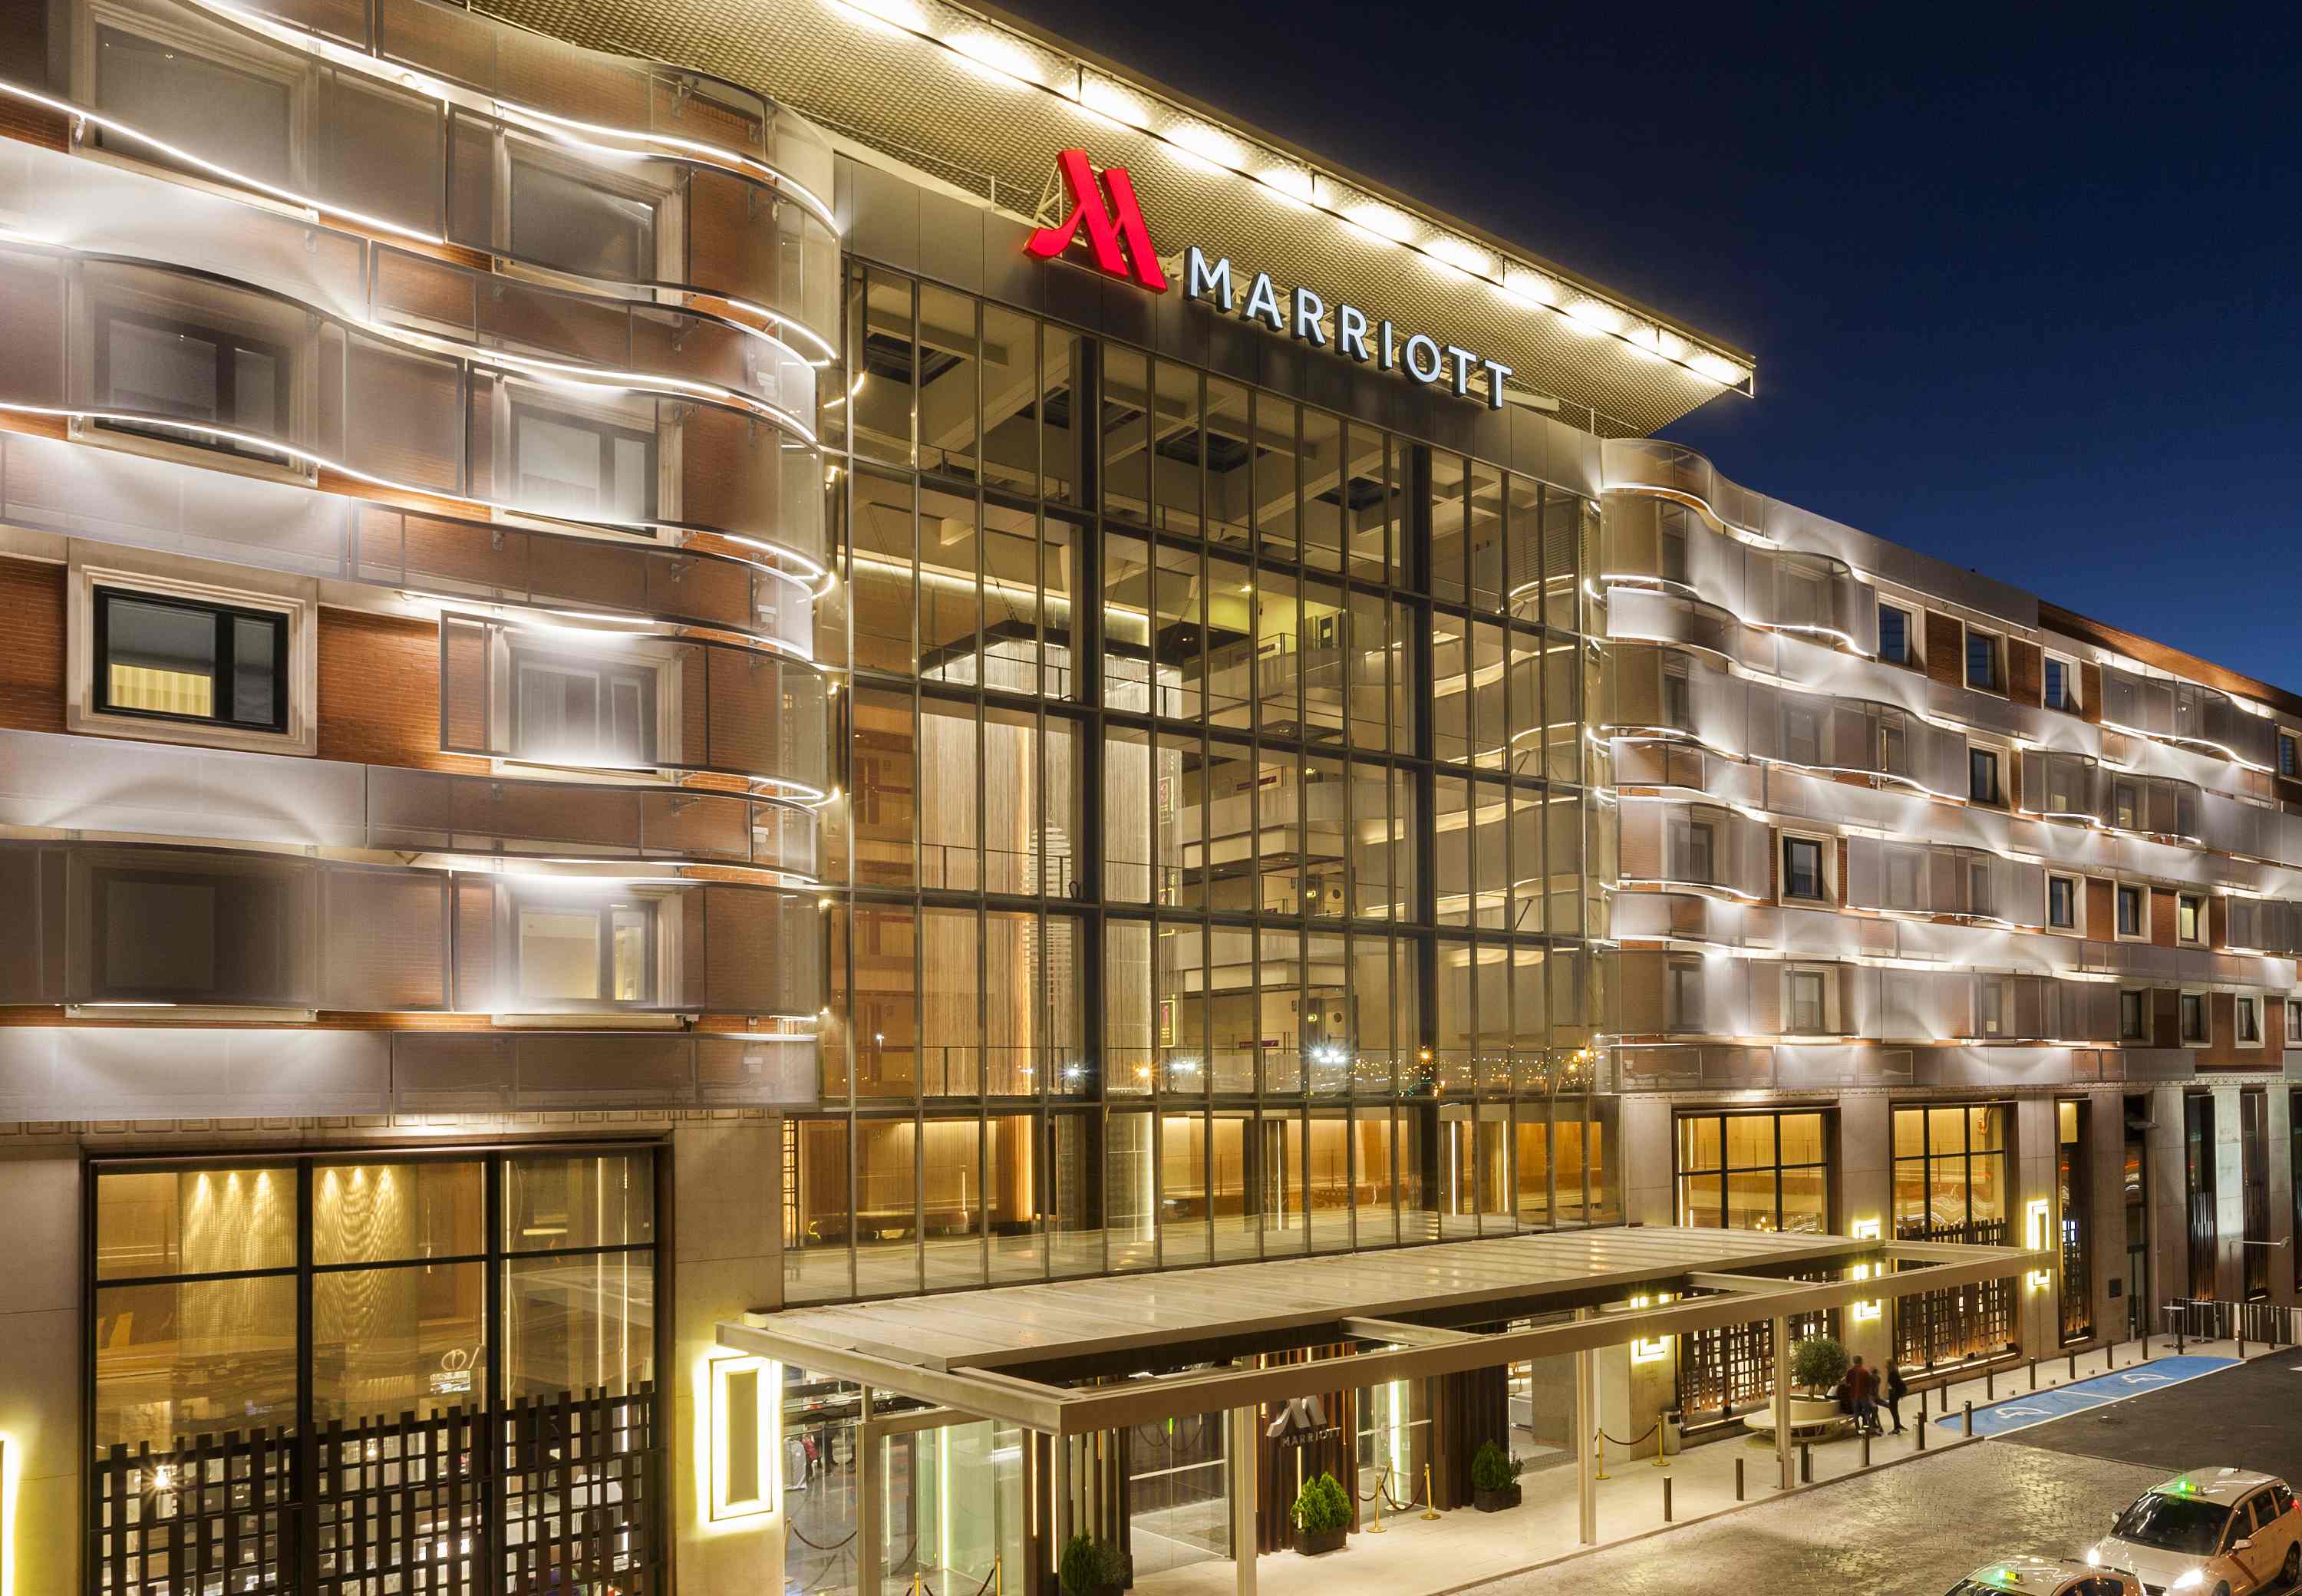 Marriott opens its largest hotel in Europe in Madrid, Spain | Hotelier